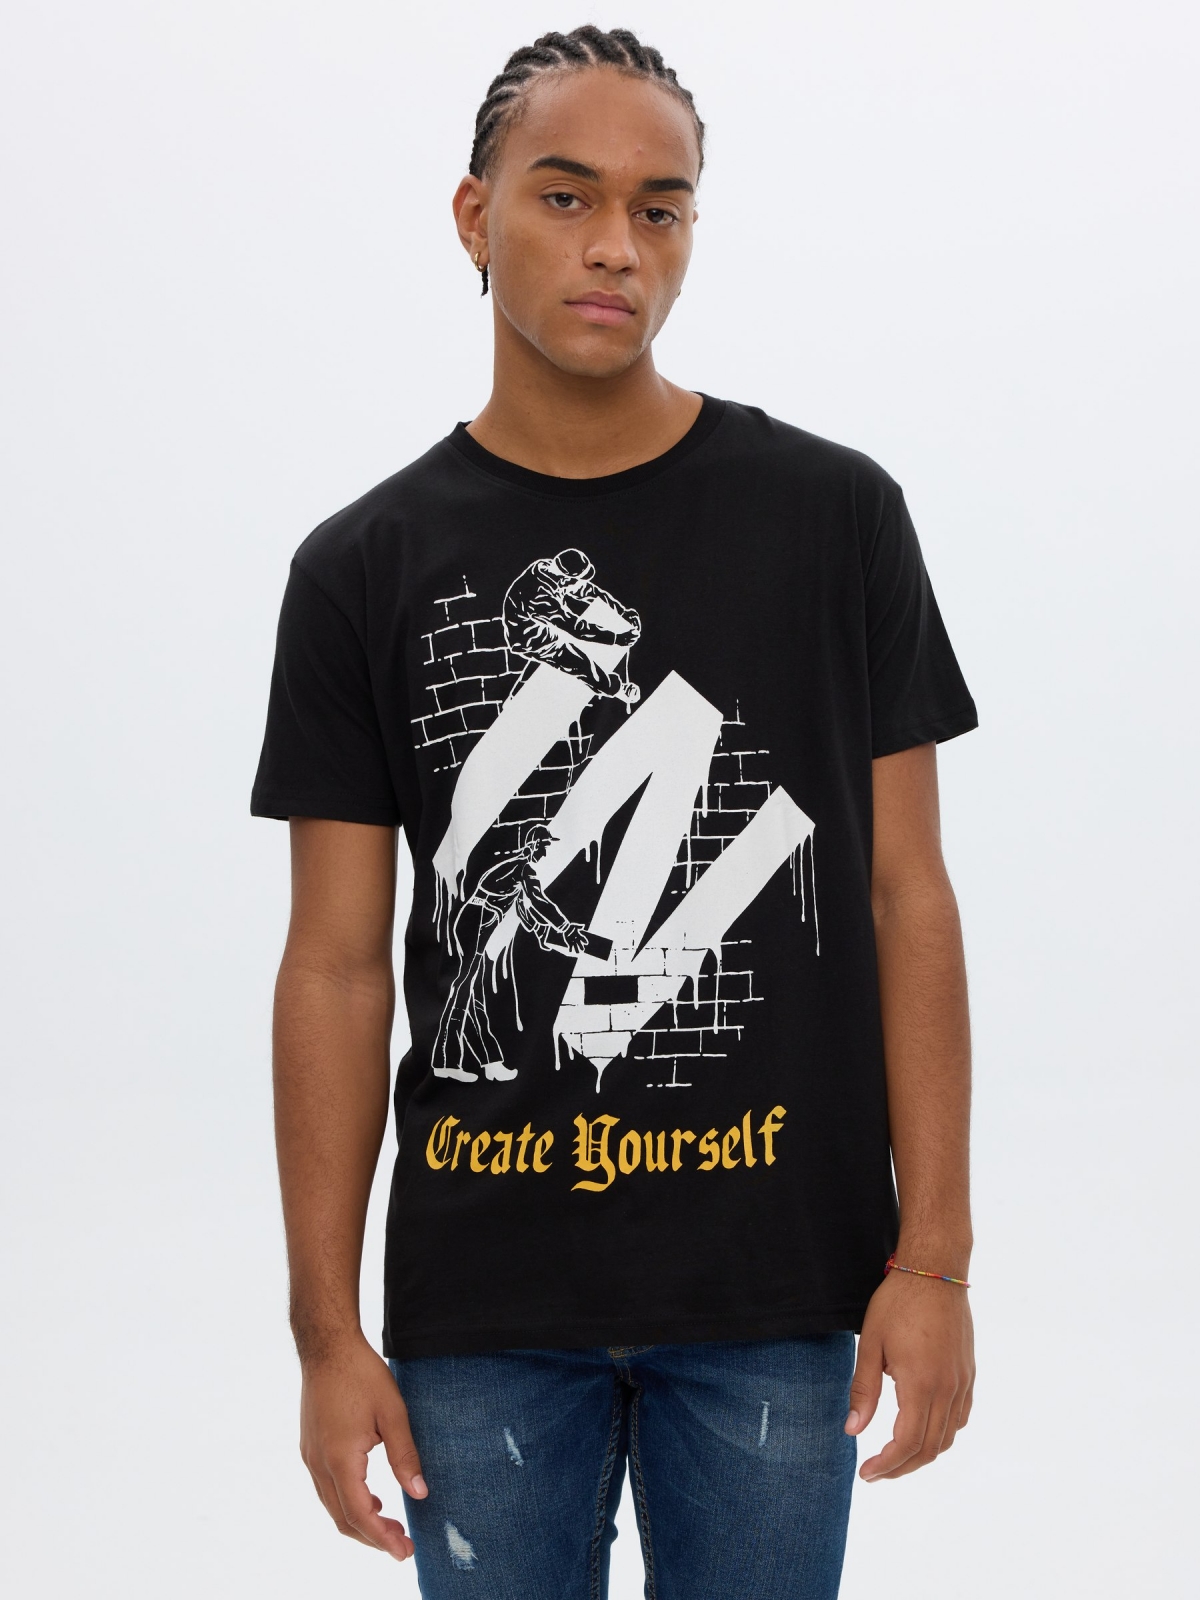 Create Yourself T-shirt